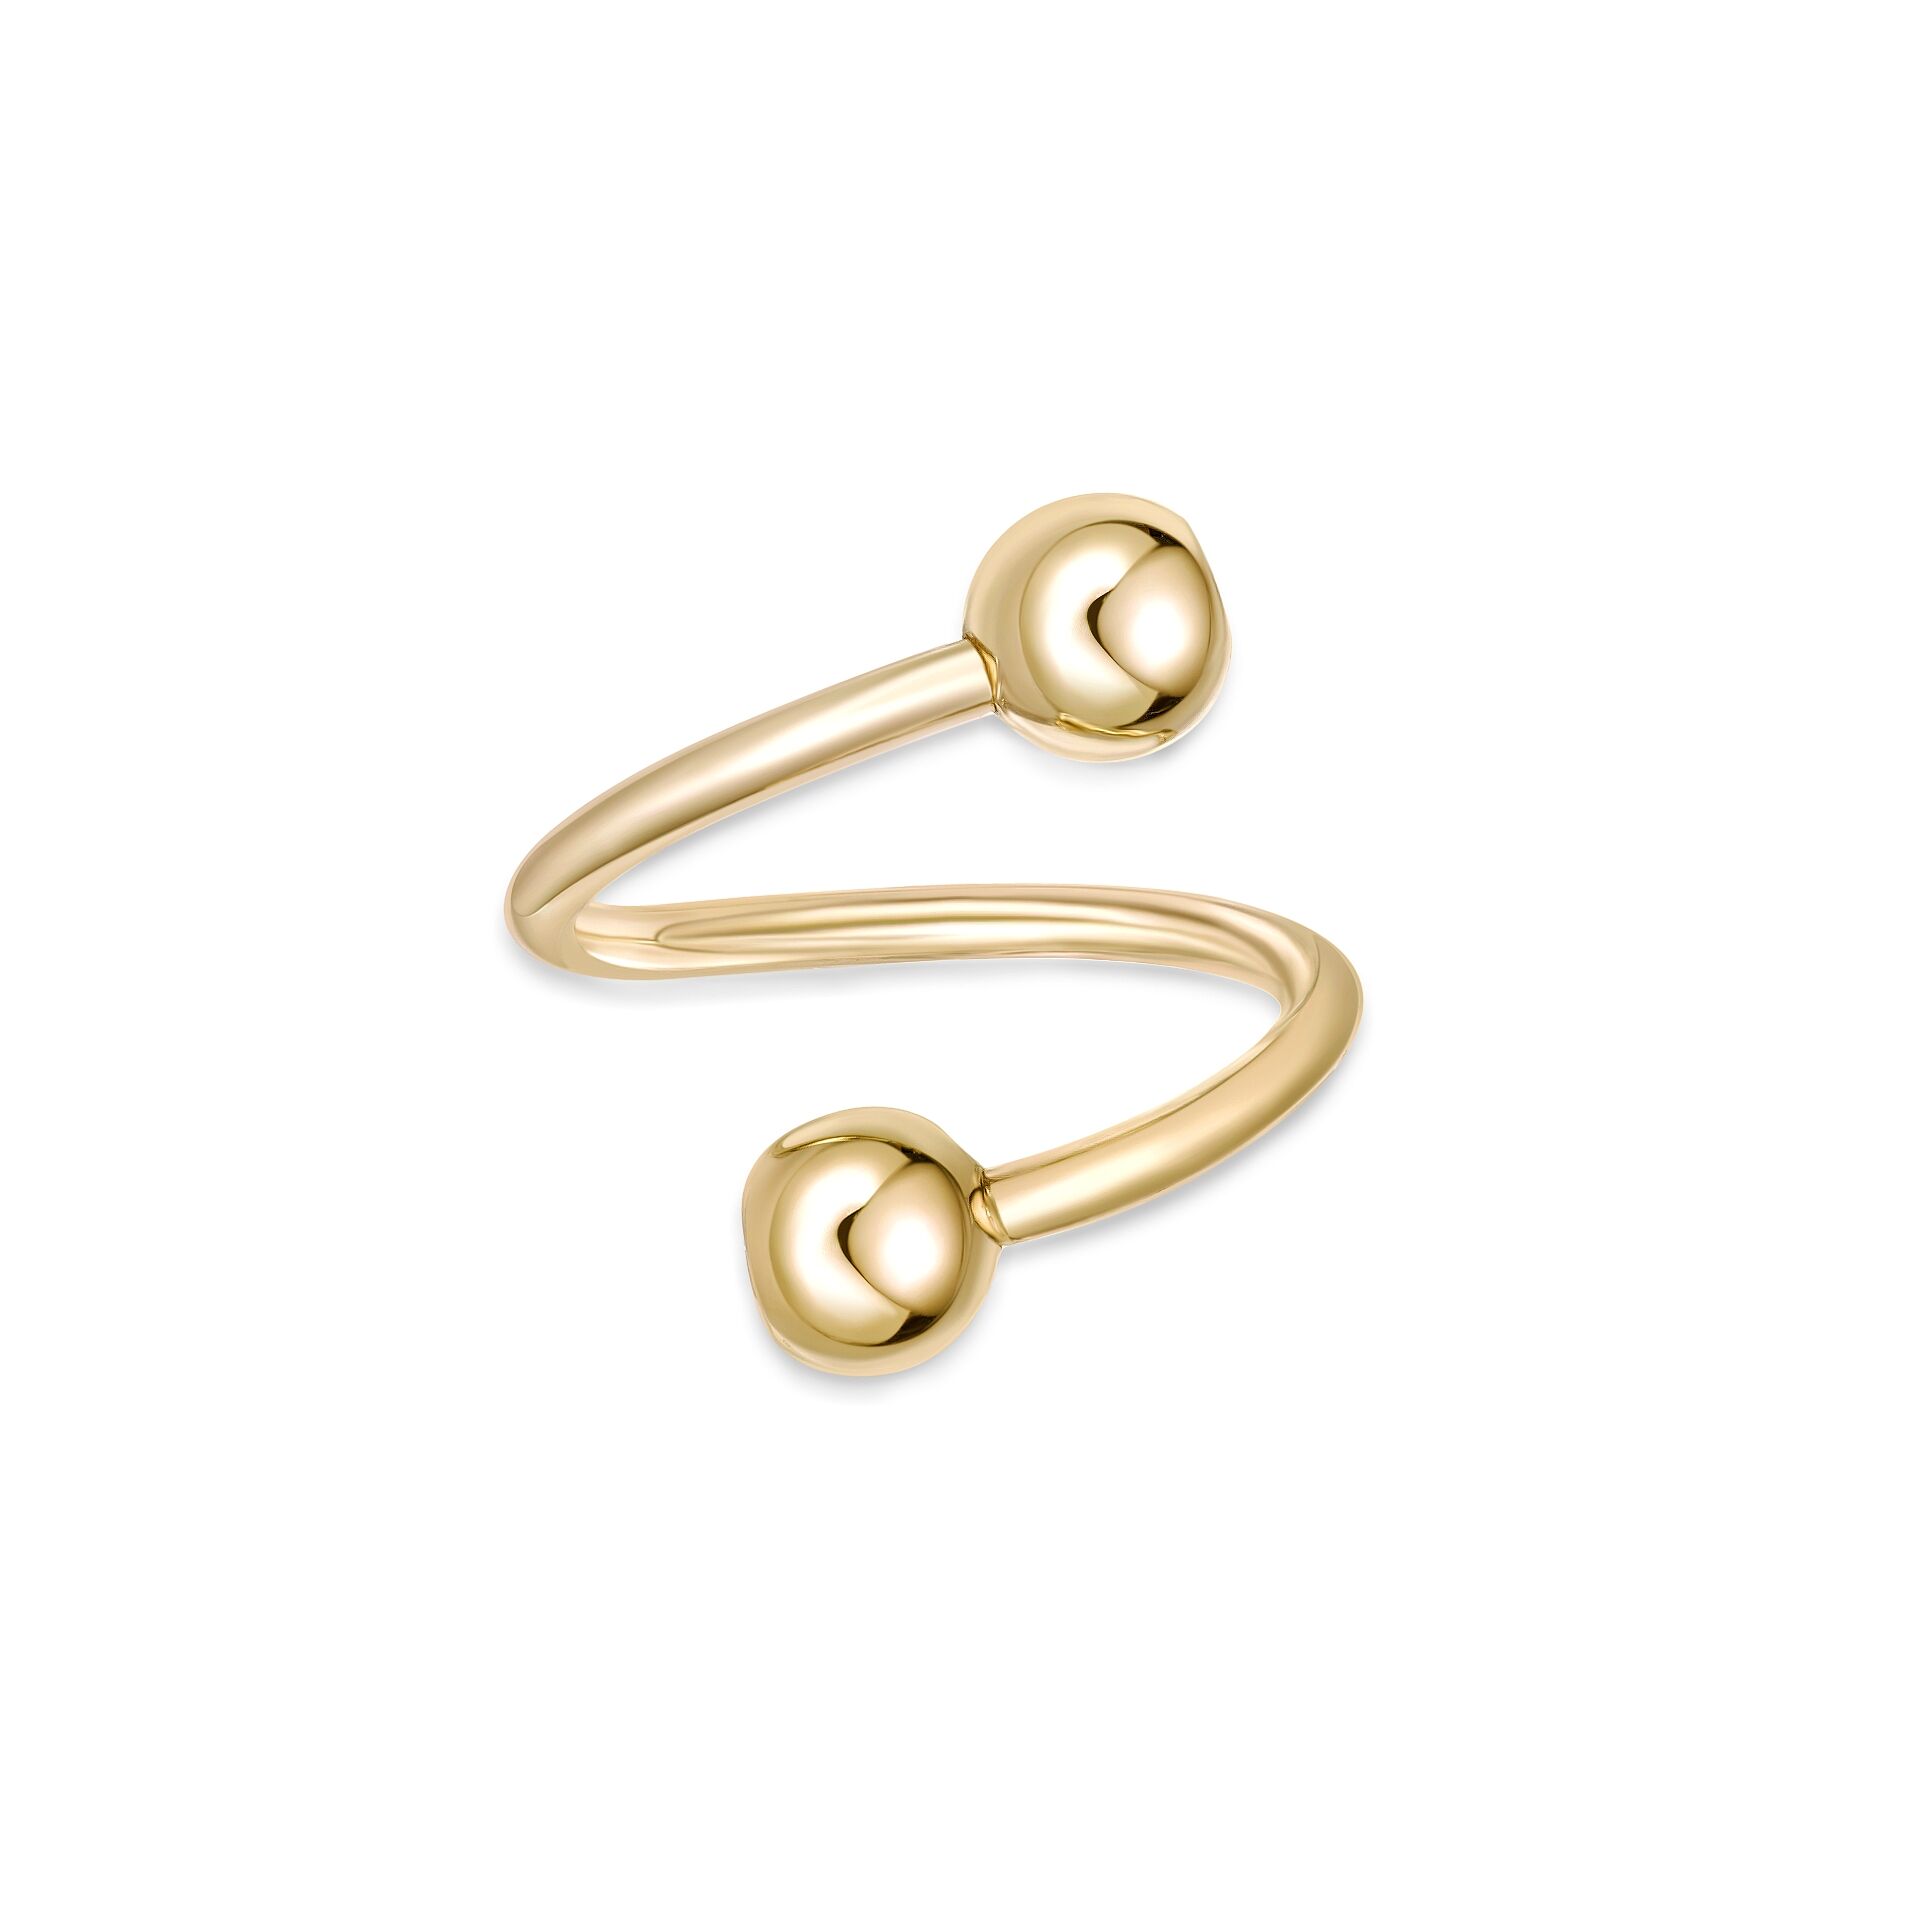 Lavari Jewelers Women’s Spiral Cubic Zirconia Belly Ring, 10K Yellow Gold, 16 Gauge